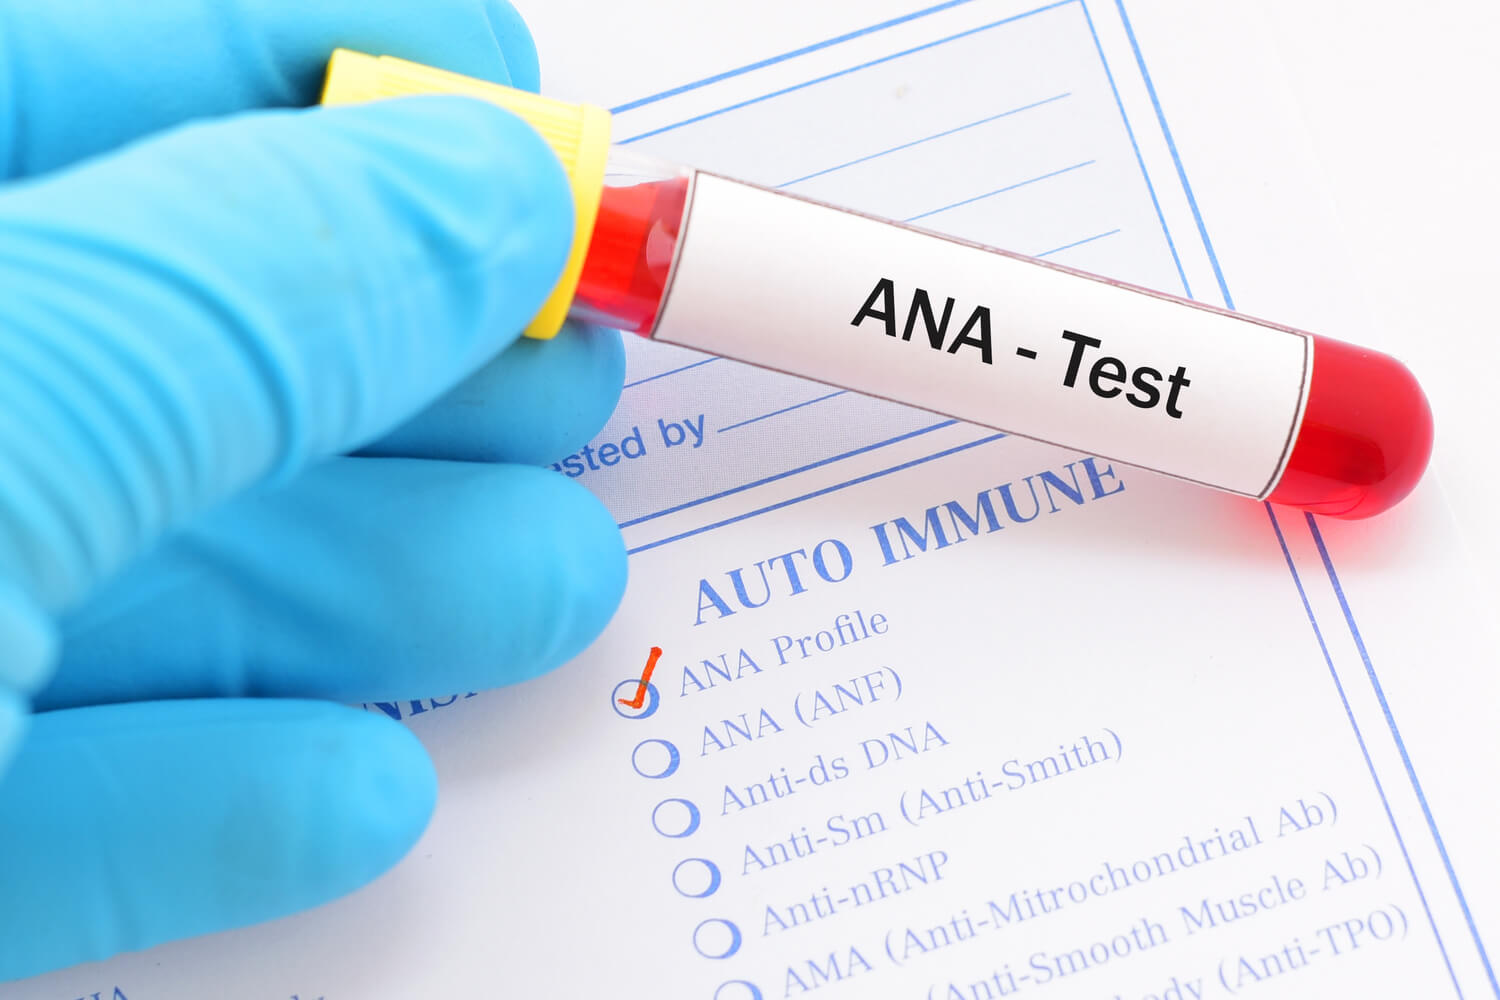 ANA test to Diagnose Lupus